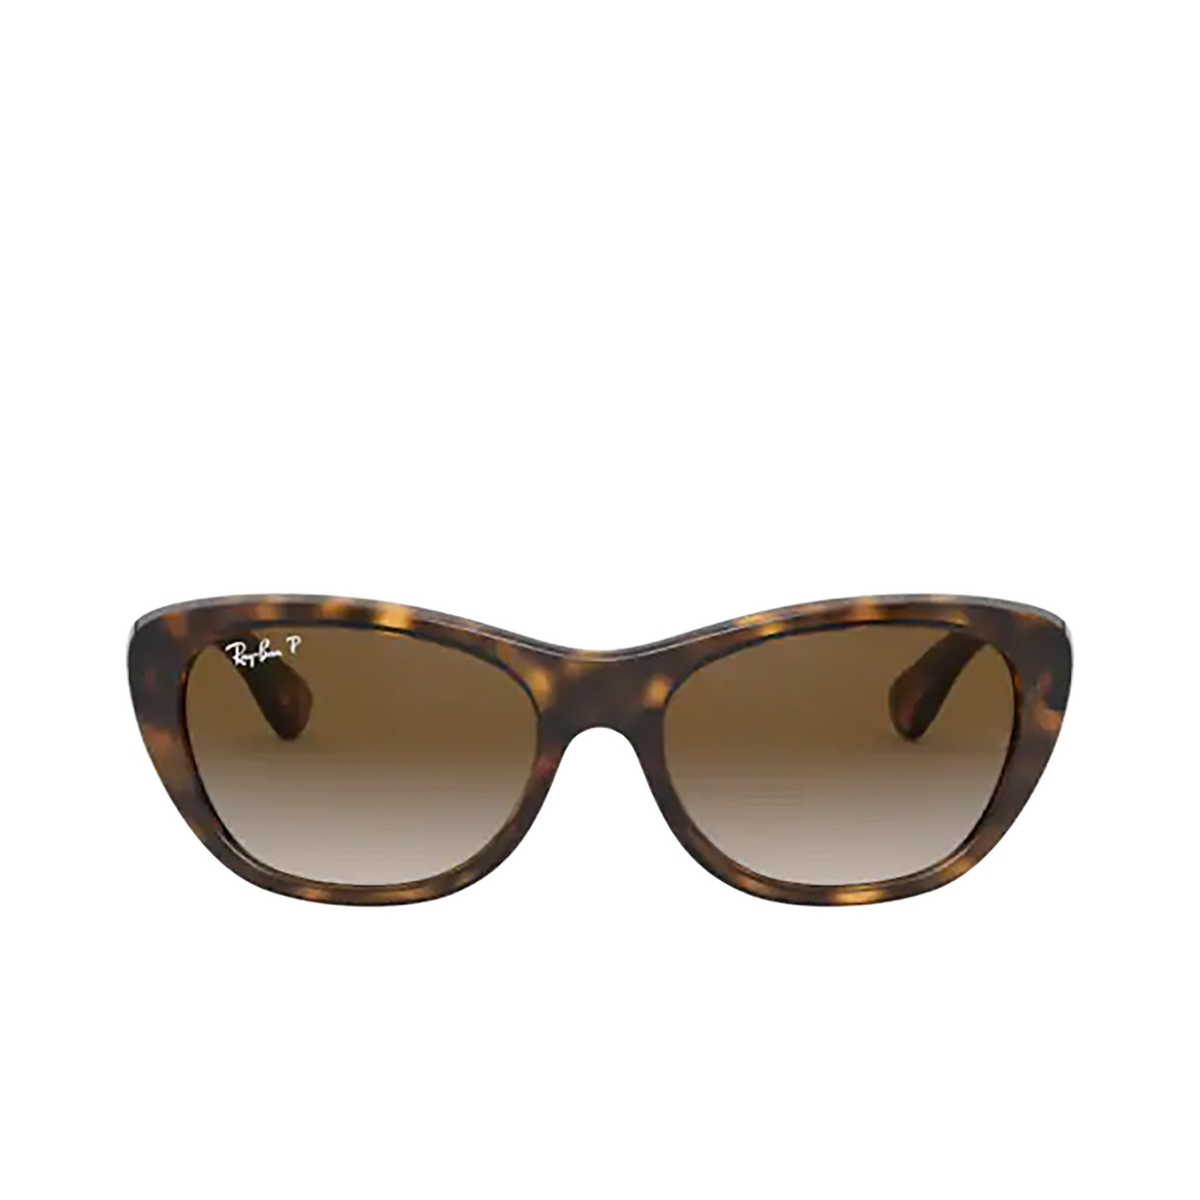 Ray-Ban® Square Sunglasses: RB4227 color 710/T5 Light Havana - 1/3